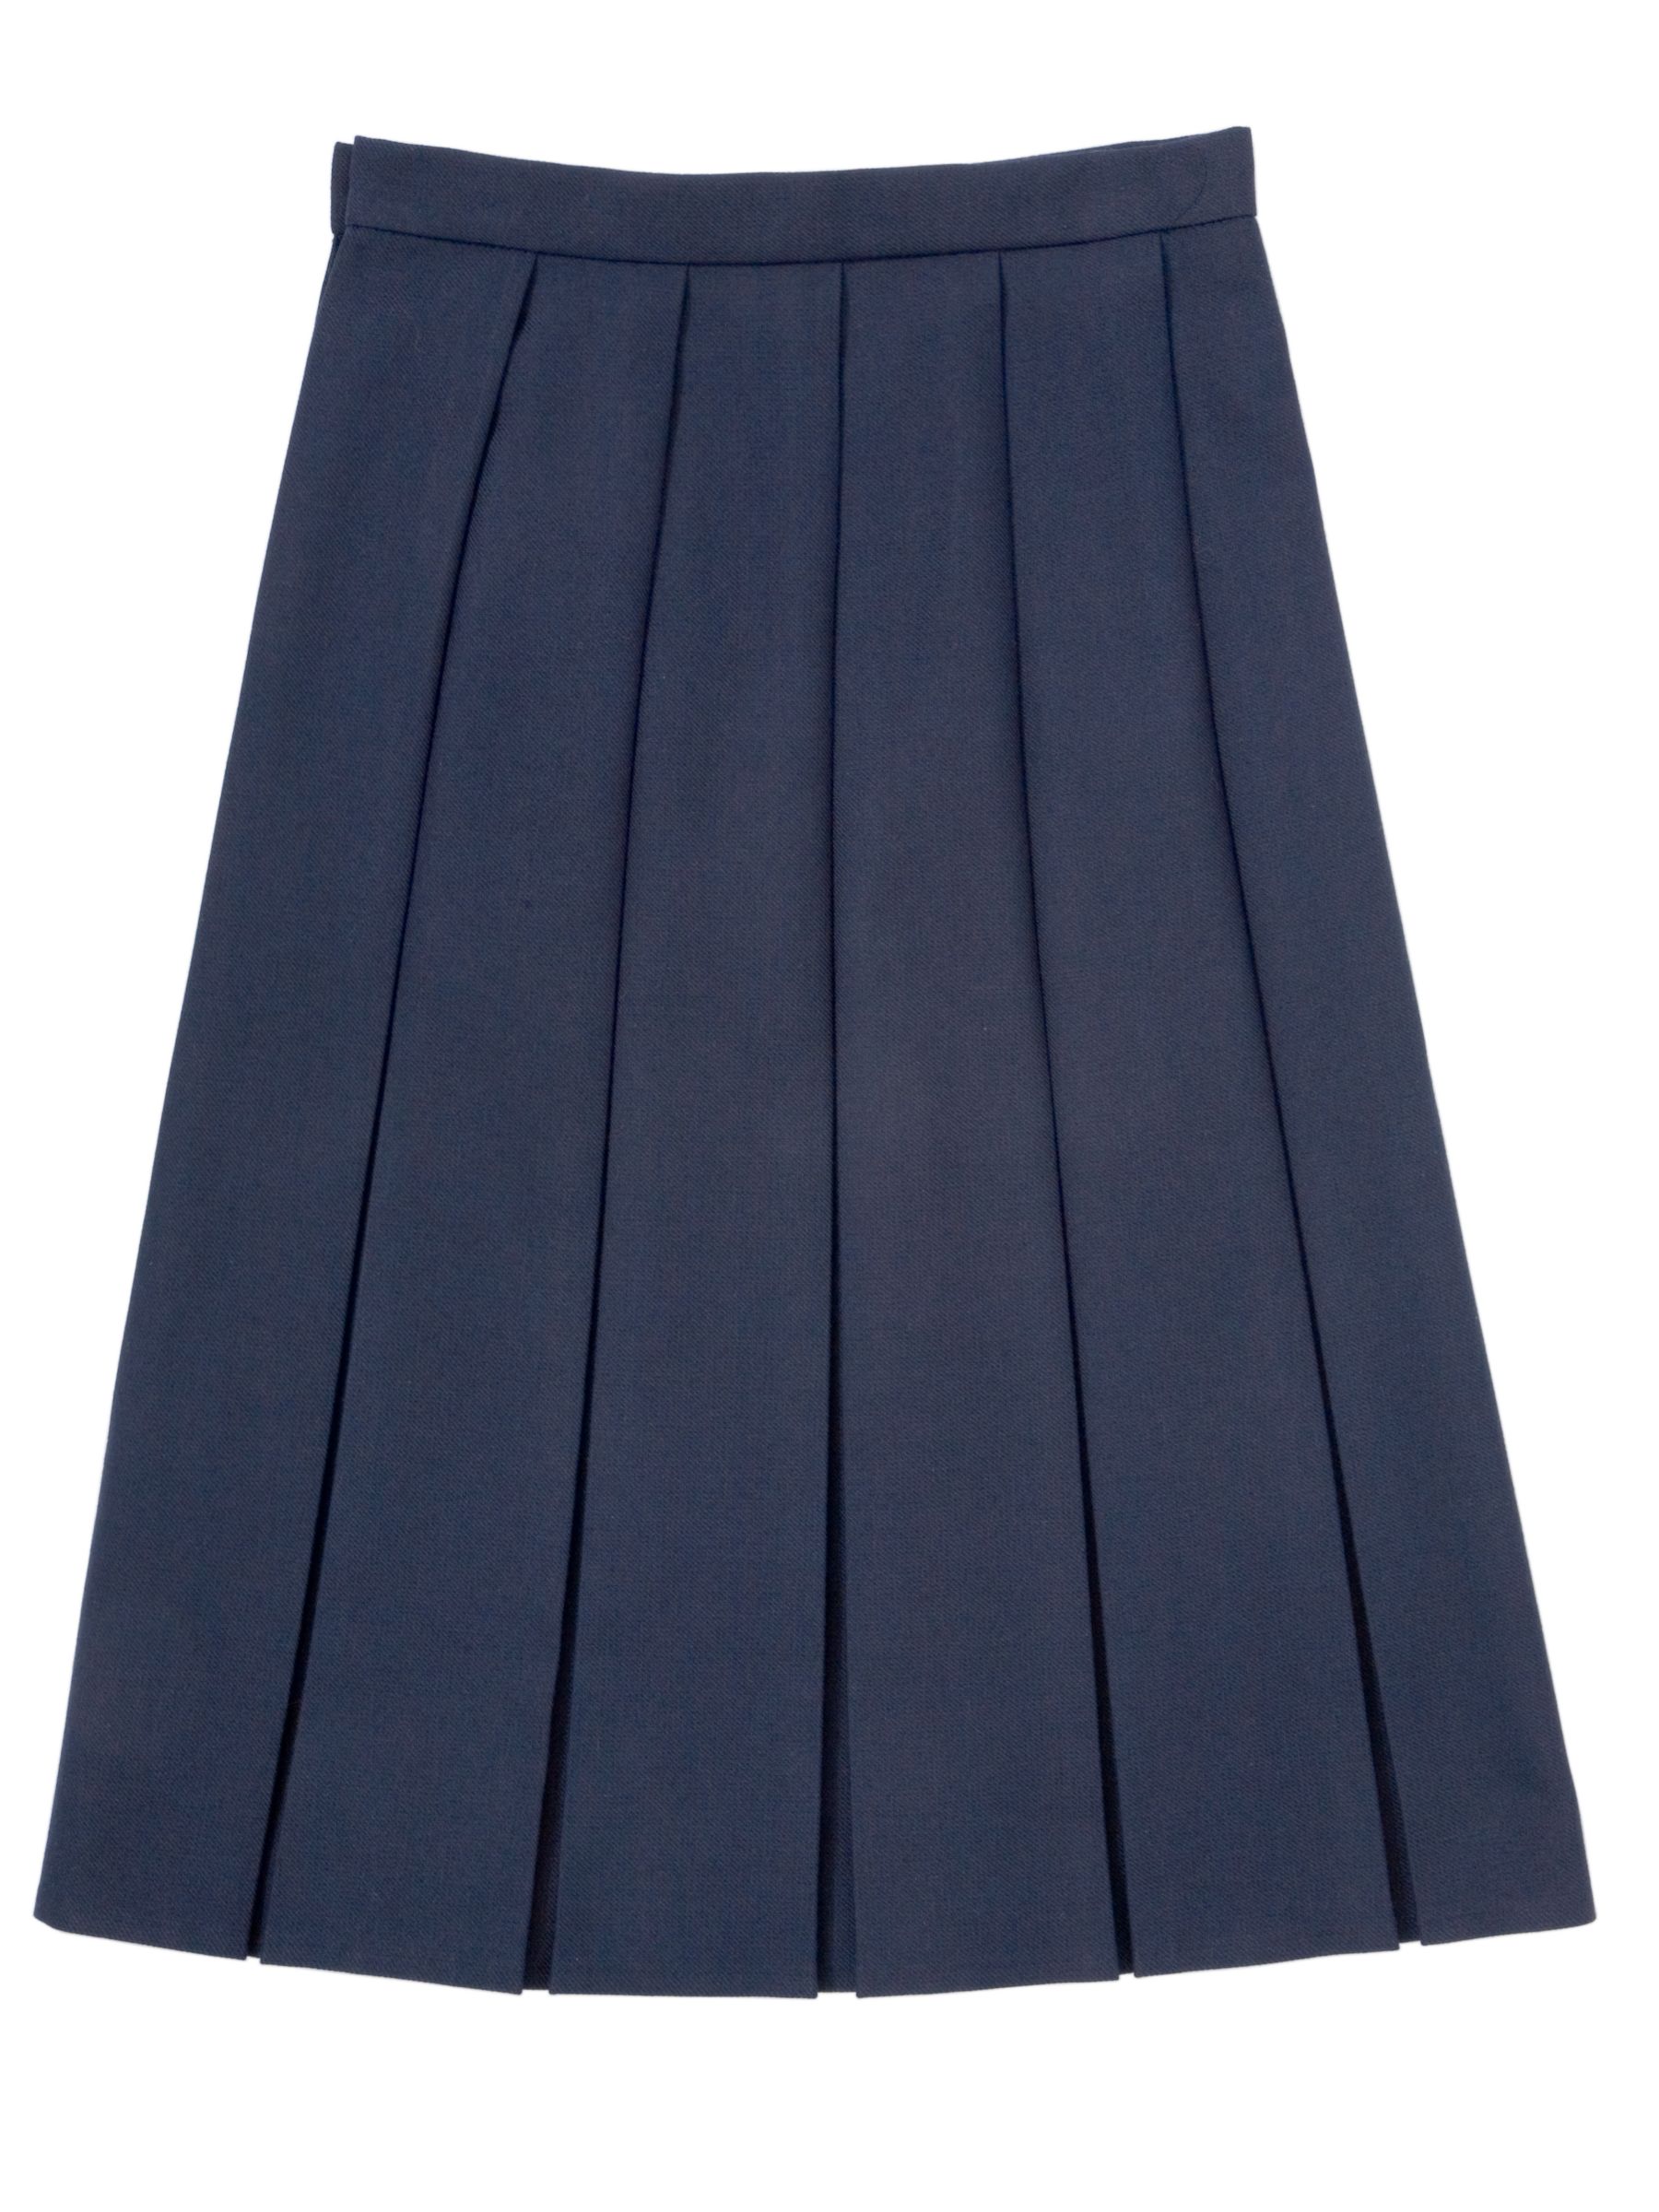 Buy Girls' School Box Pleat Skirt, Navy | John Lewis